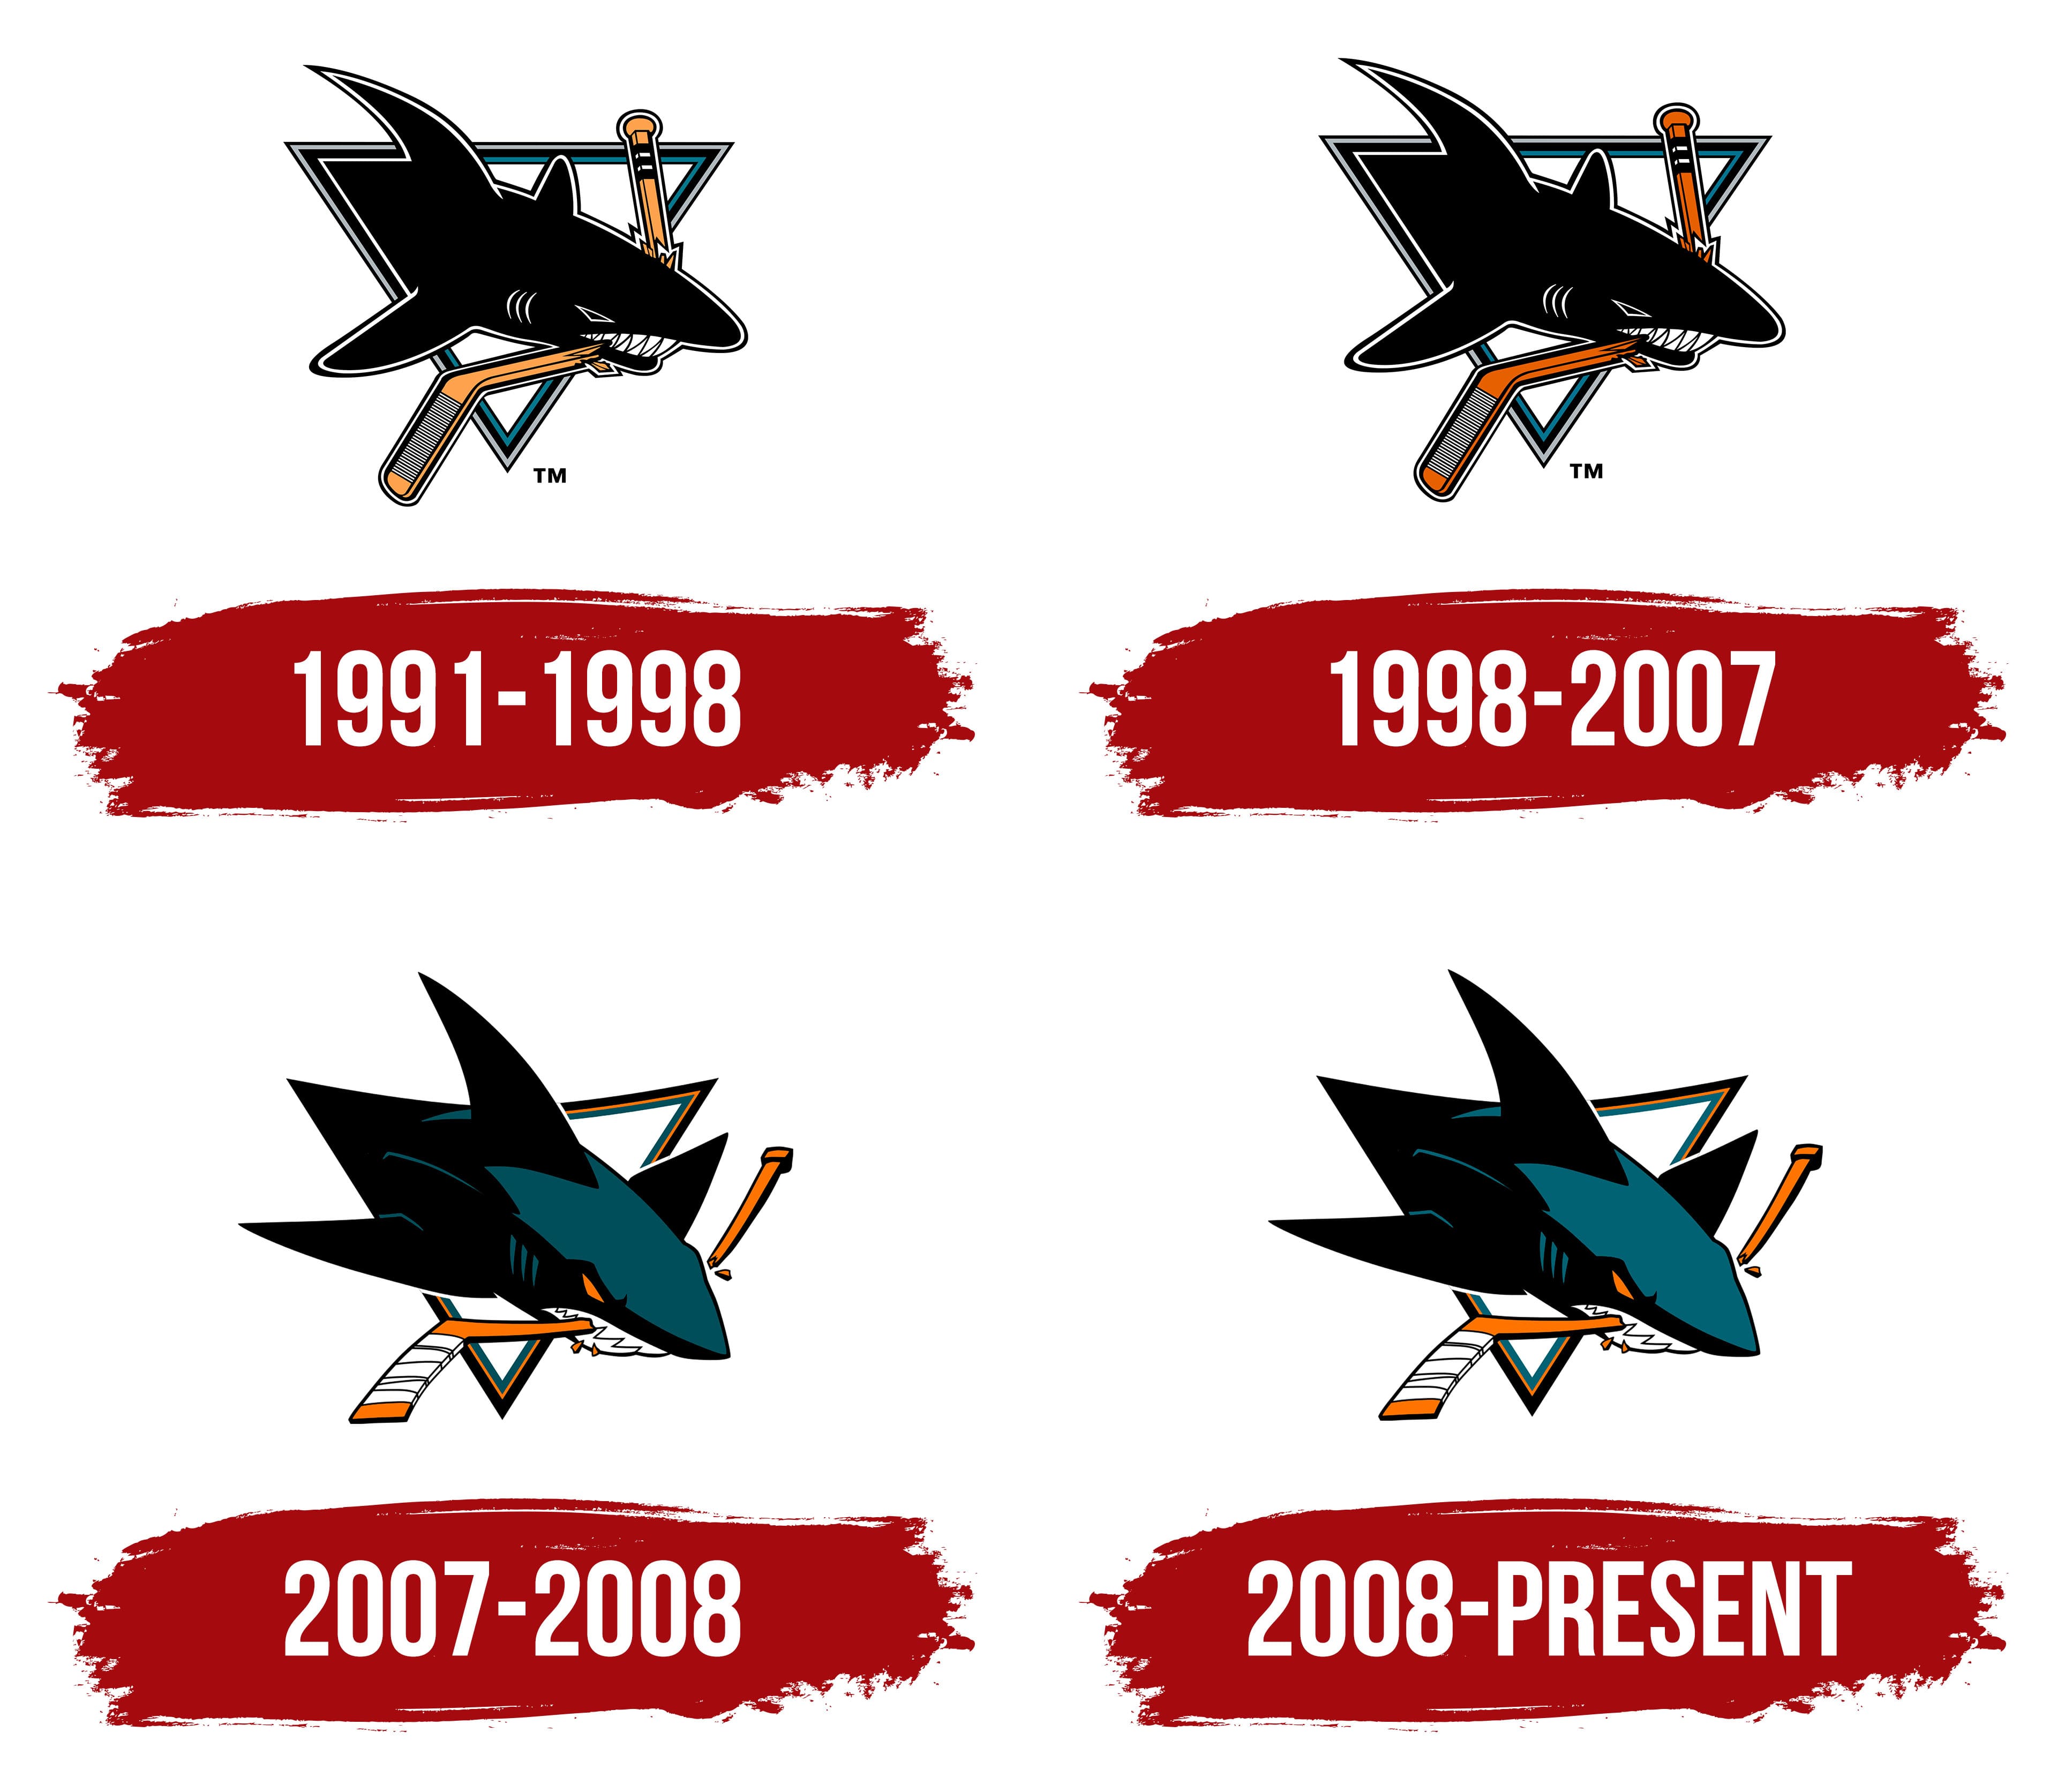 An upgraded mascot logo of Sharky, The San Jose Sharks Mascot #NHL